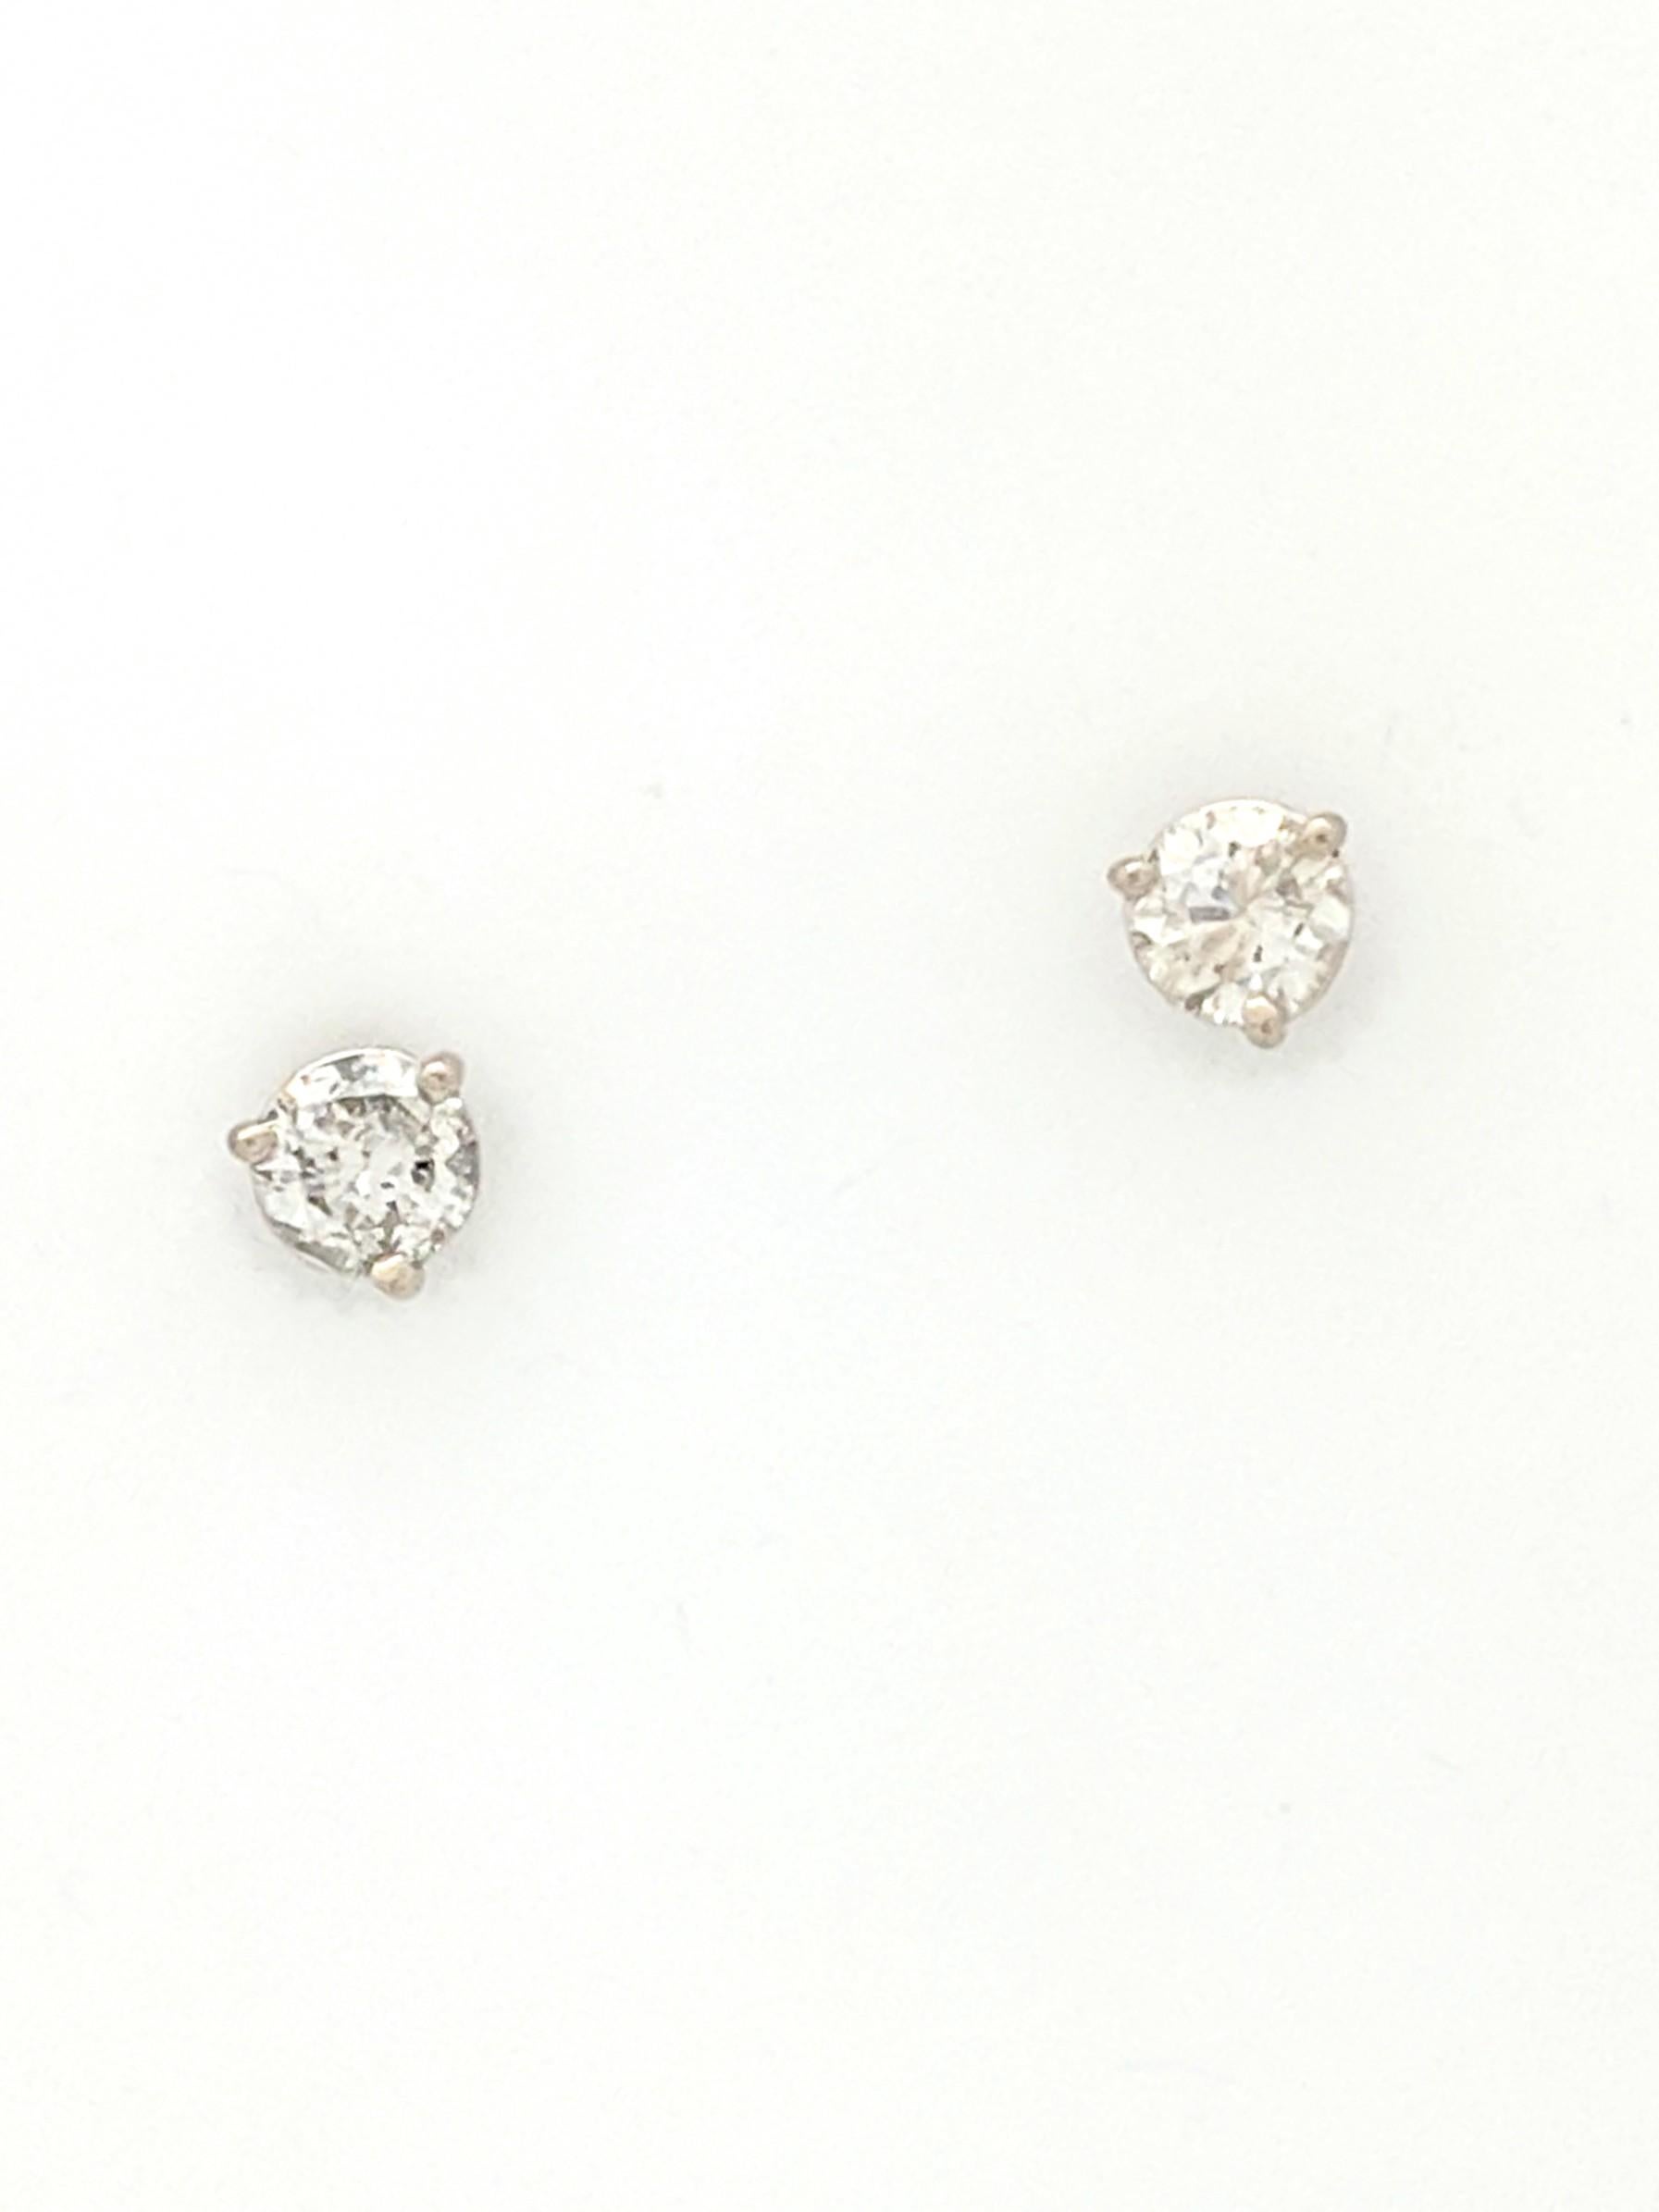 Contemporary 14 Karat White Gold Diamond Stud Earrings .50 Carat I1/I